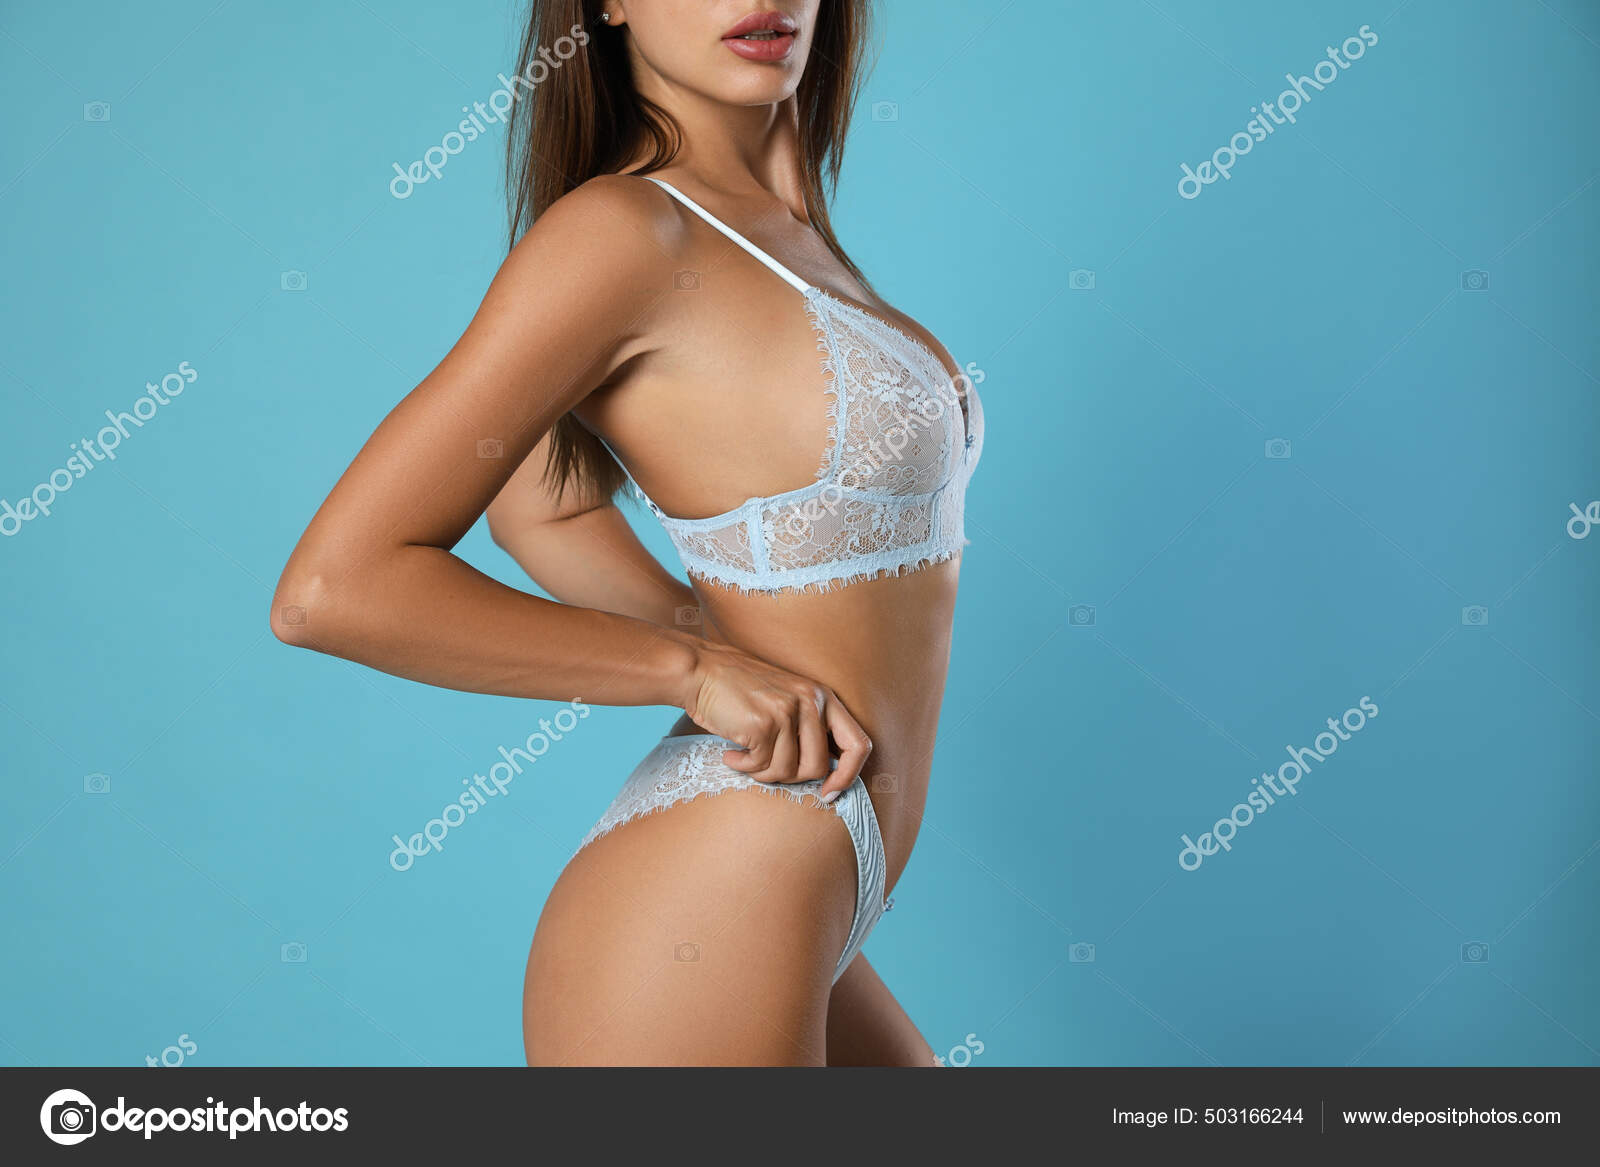 https://st2.depositphotos.com/16122460/50316/i/1600/depositphotos_503166244-stock-photo-woman-sexy-panties-bra-light.jpg